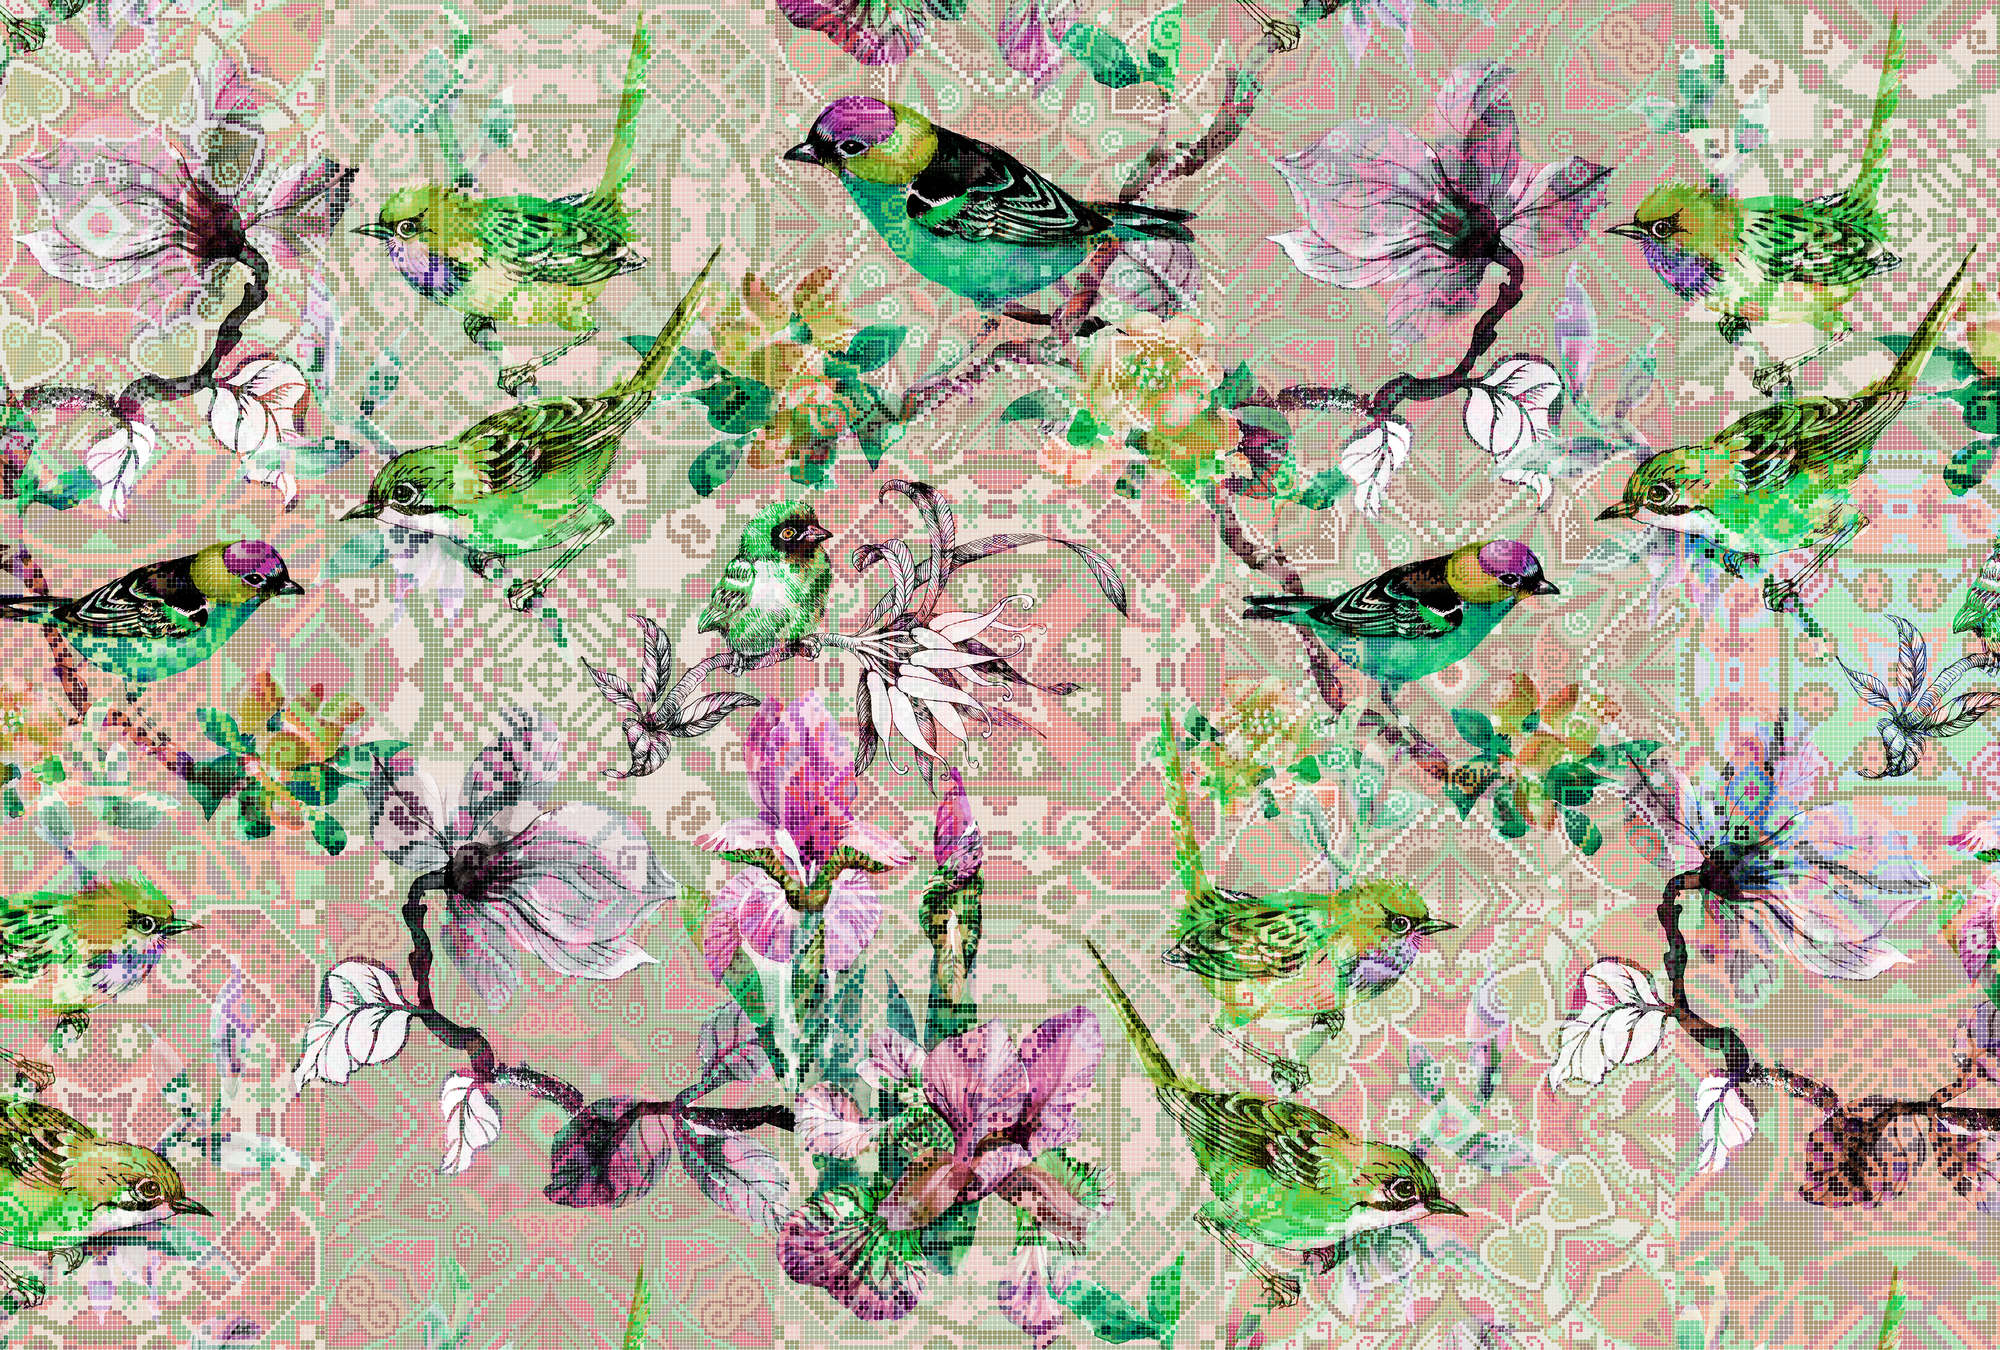             Vogel Fototapete mit Mosaik Muster – Walls by Patel
        